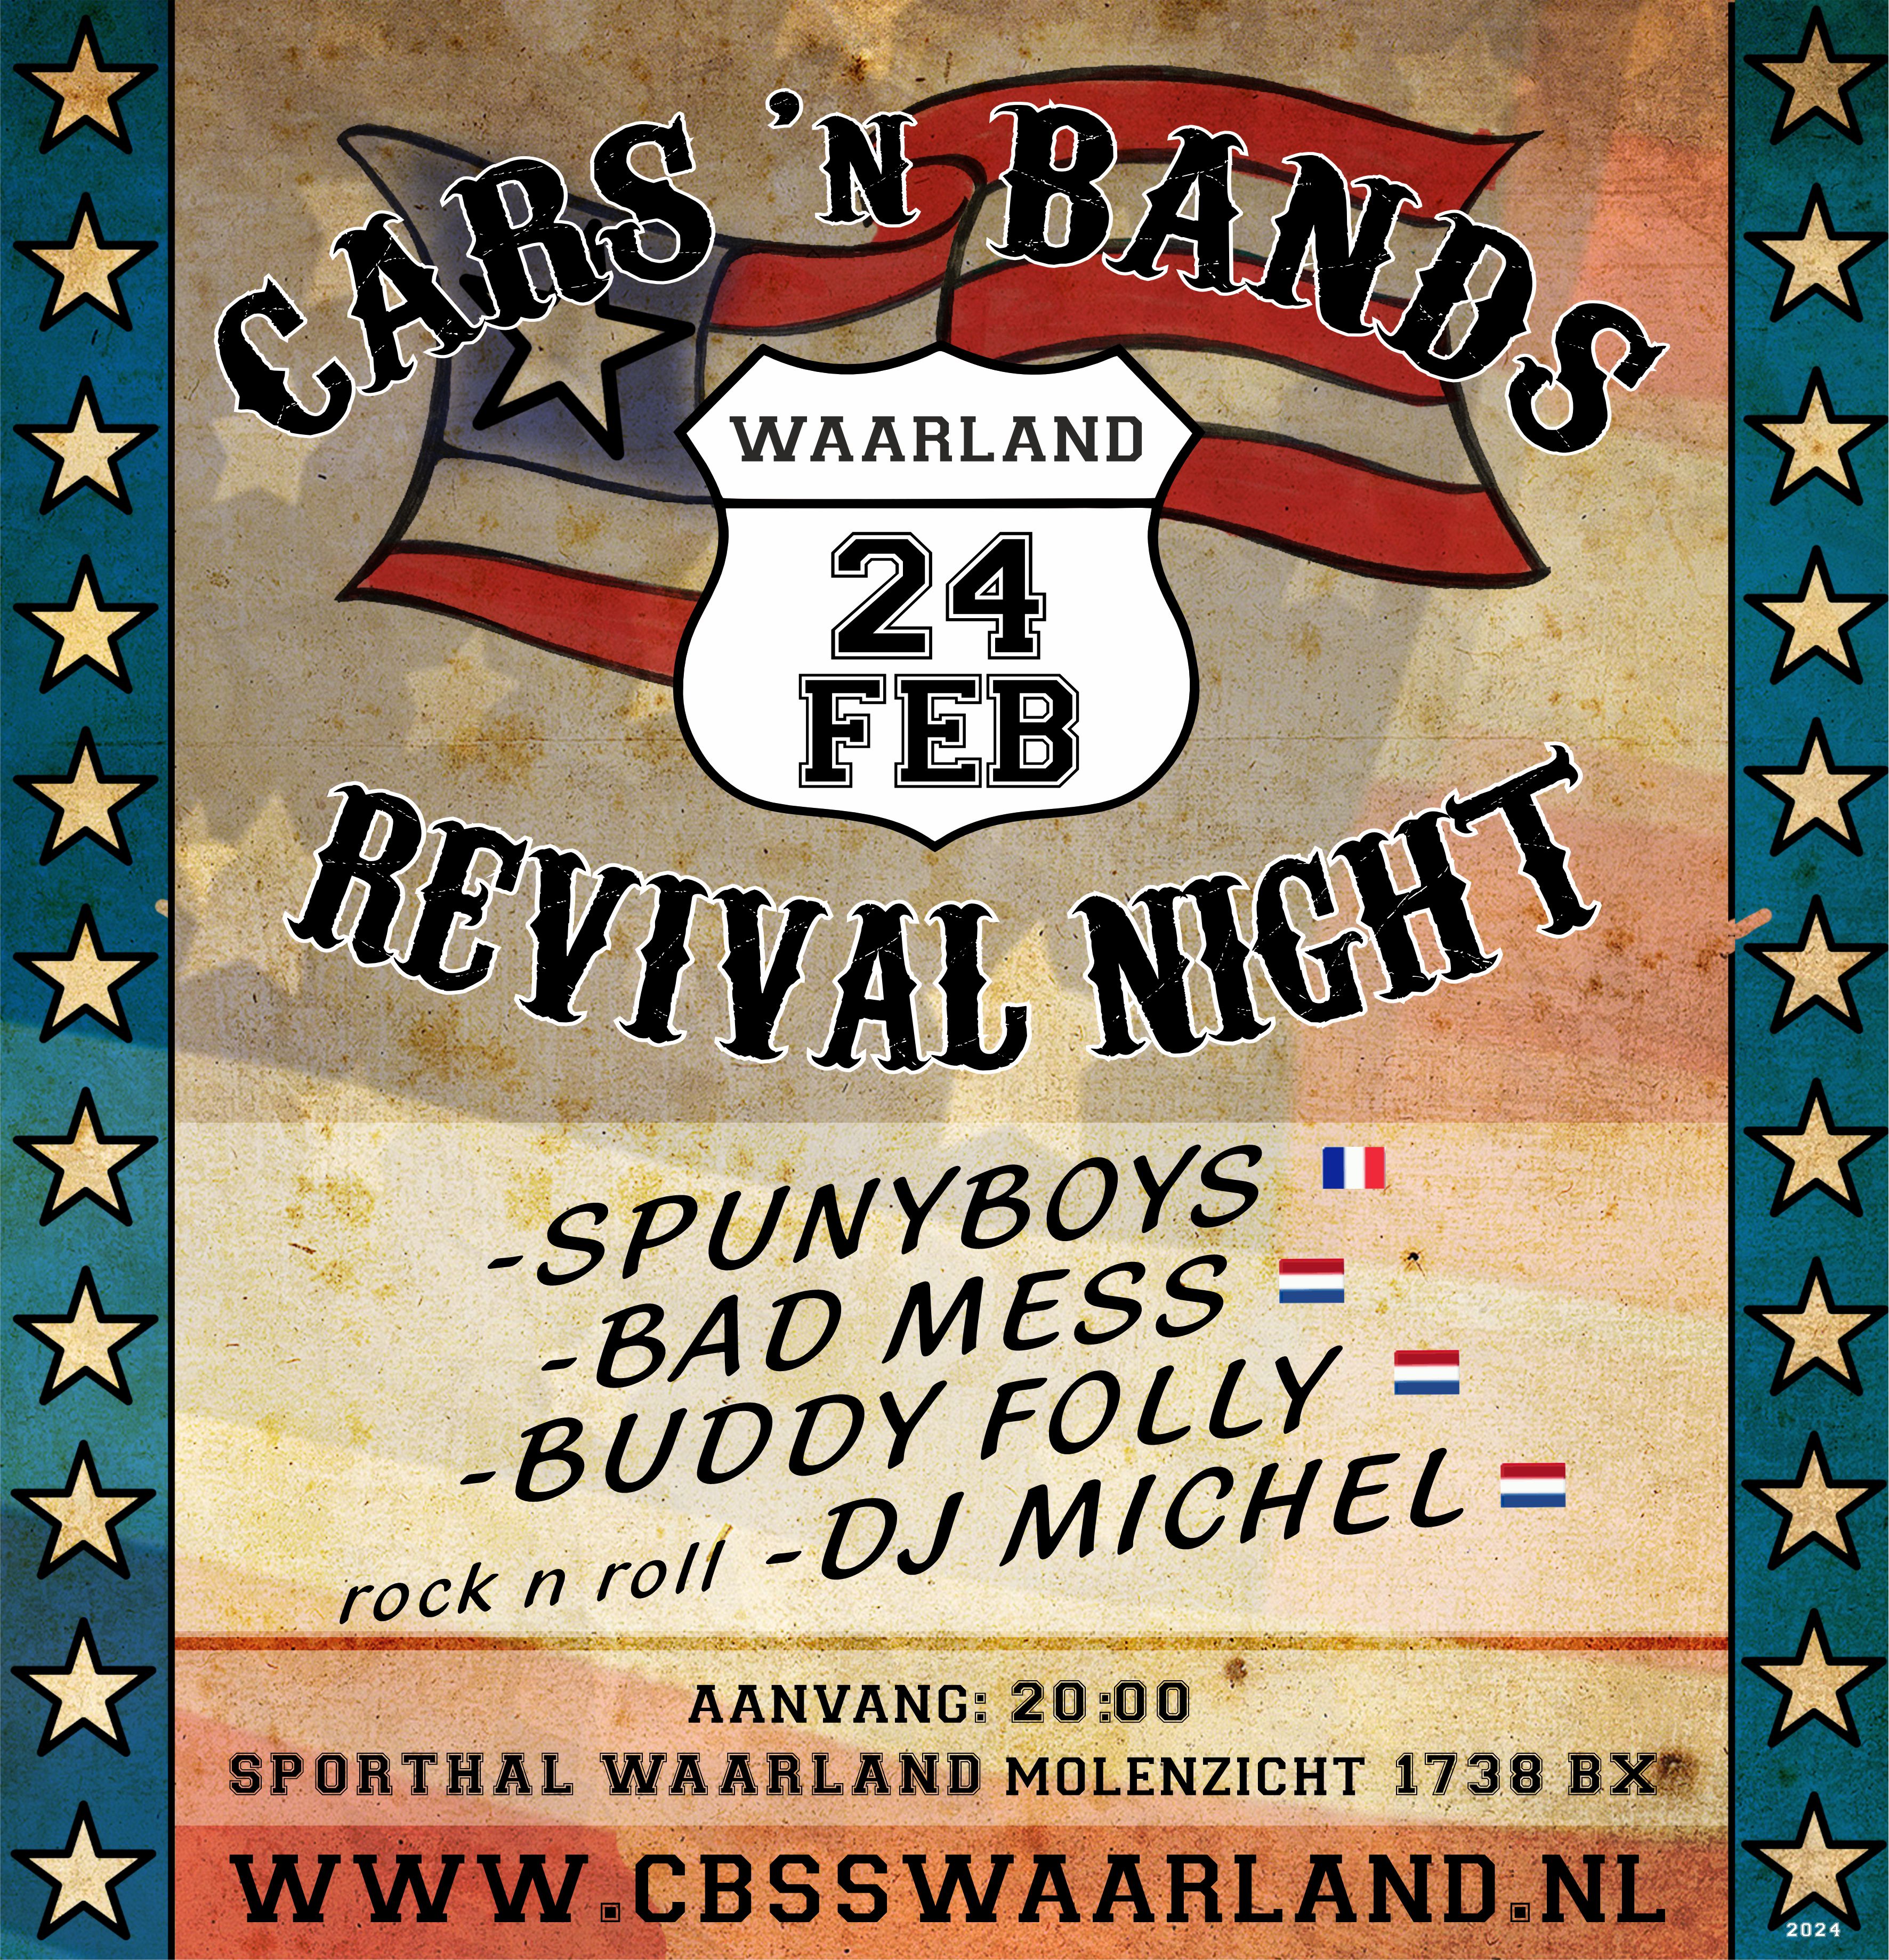 Cars n bands revival night Waarland